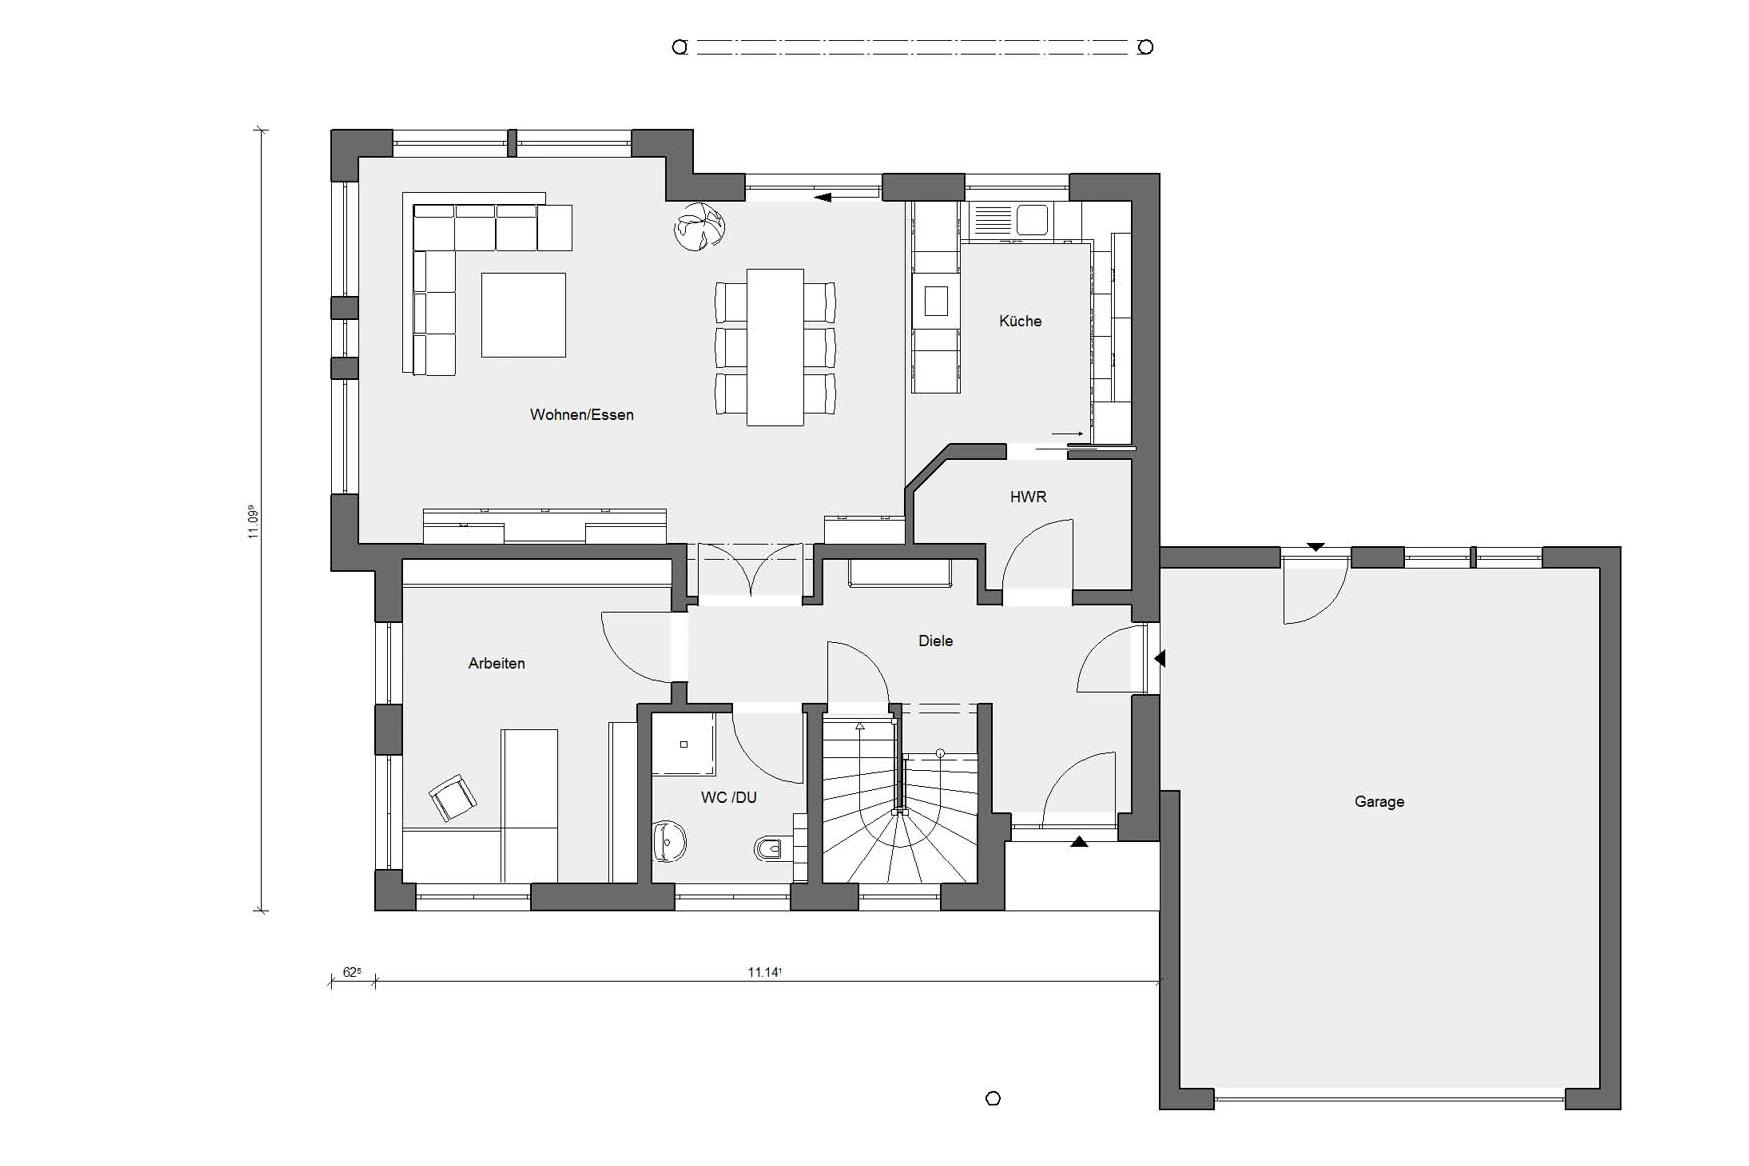 Ground floor plan E 15-201.1 Energy Plus house with low energy